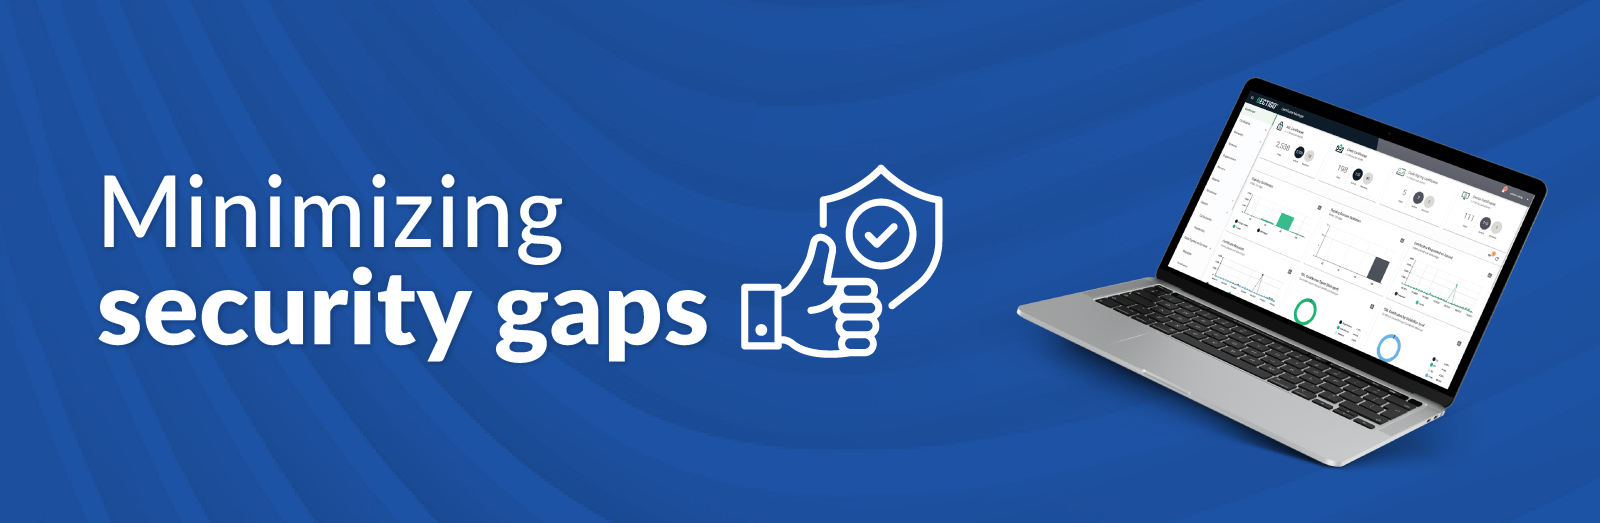 minimazing security gaps icon